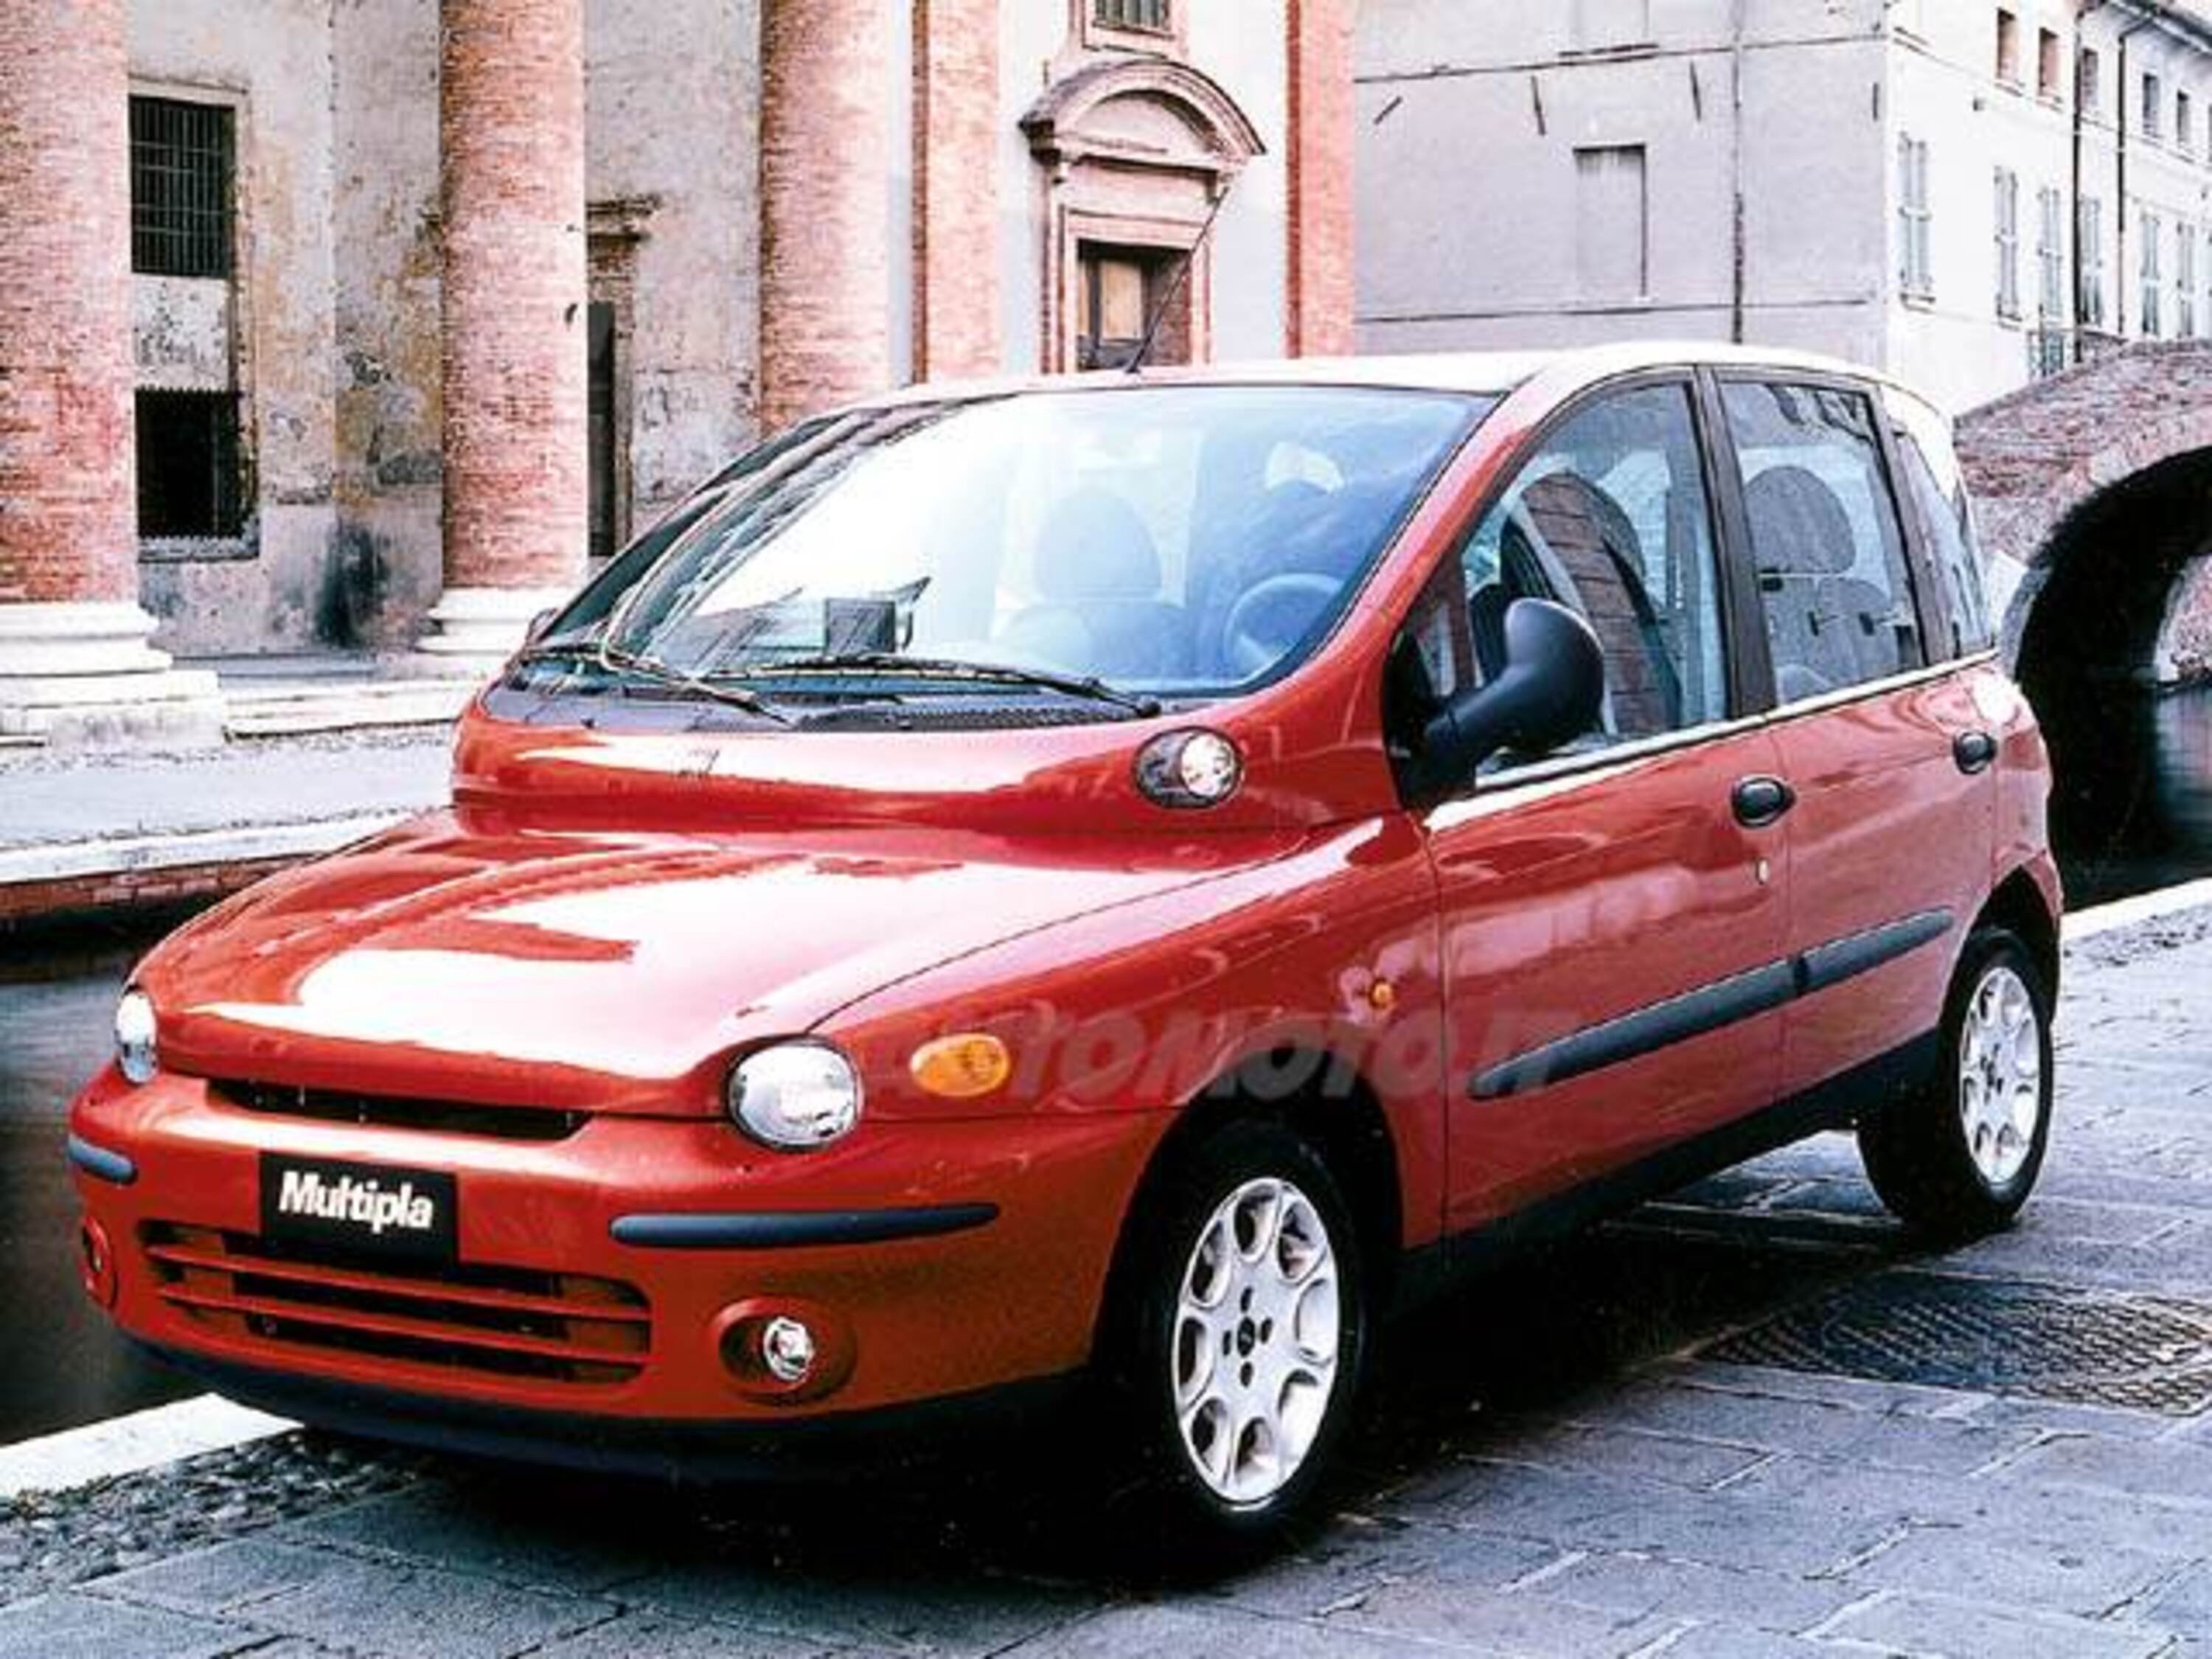 Fiat Multipla 110 JTD Serie Speciale